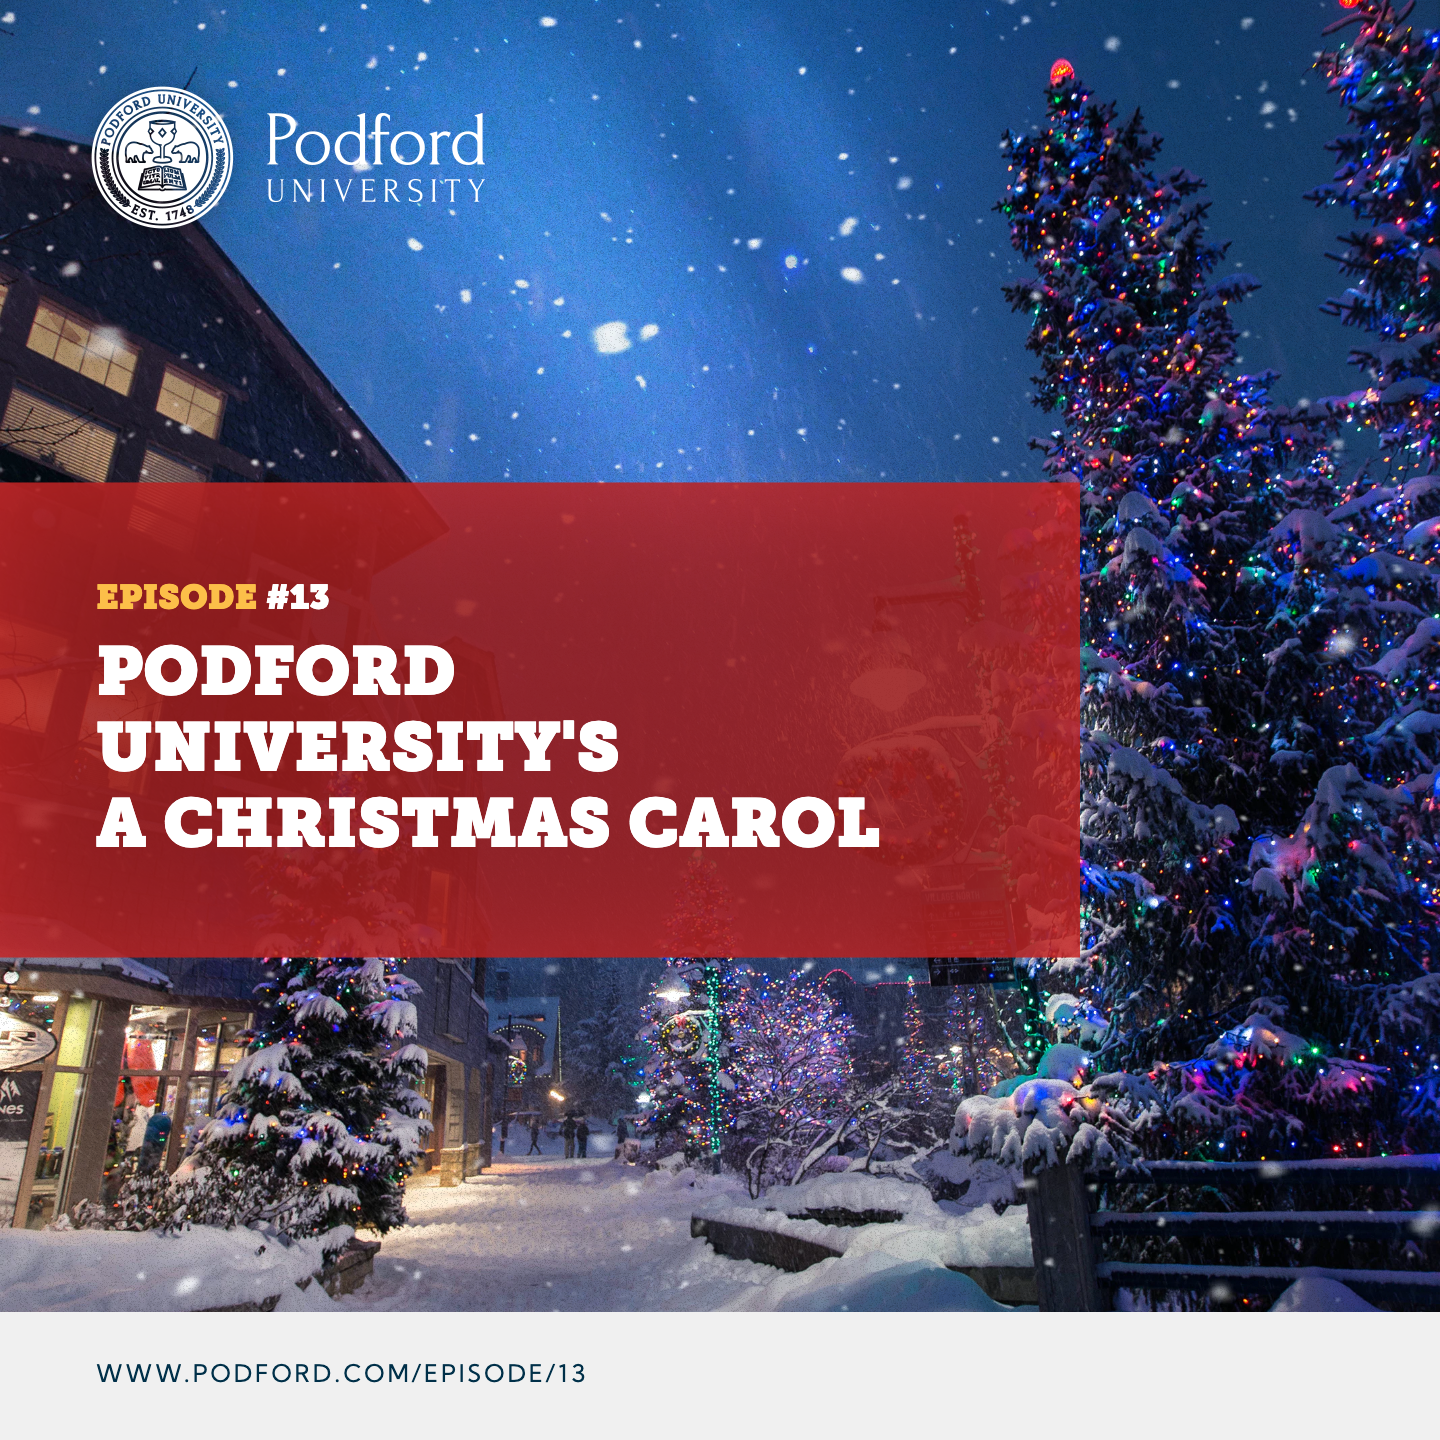 Podford University's A Christmas Carol